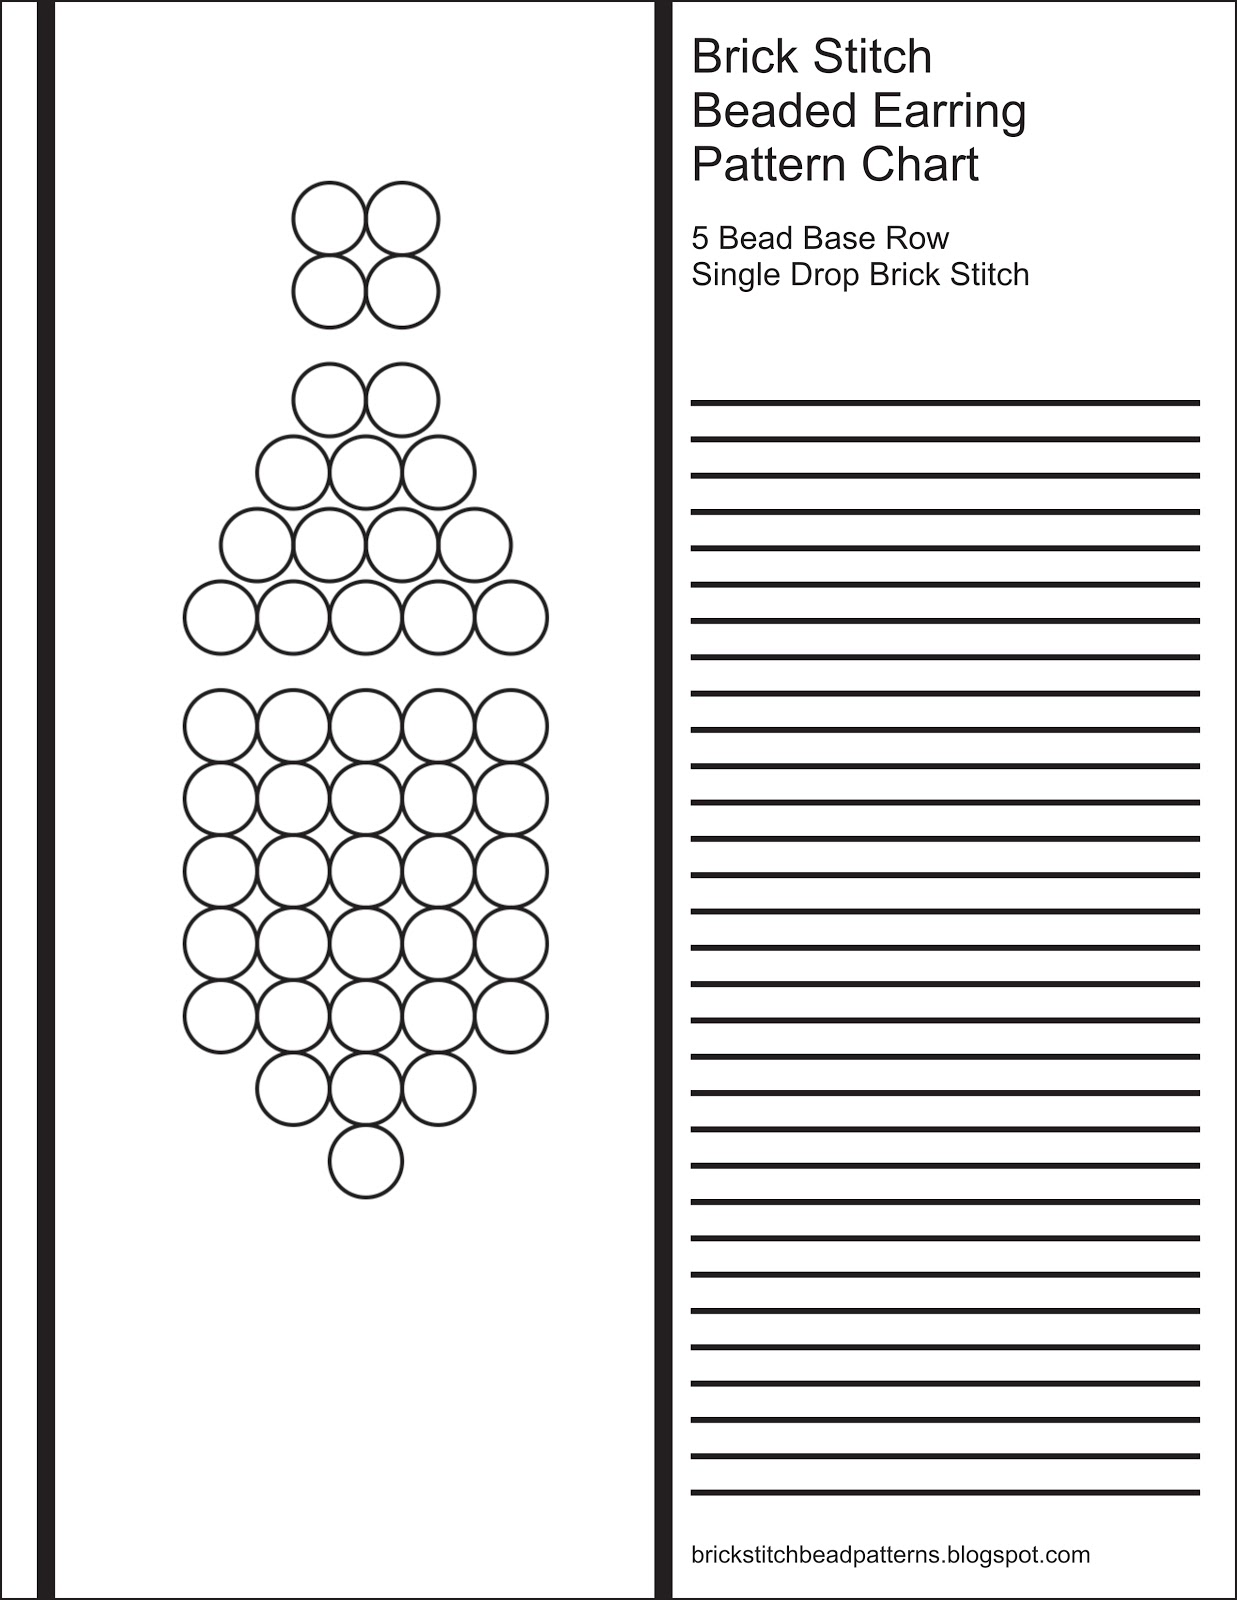 brick-stitch-bead-patterns-journal-5-bead-base-row-blank-beaded